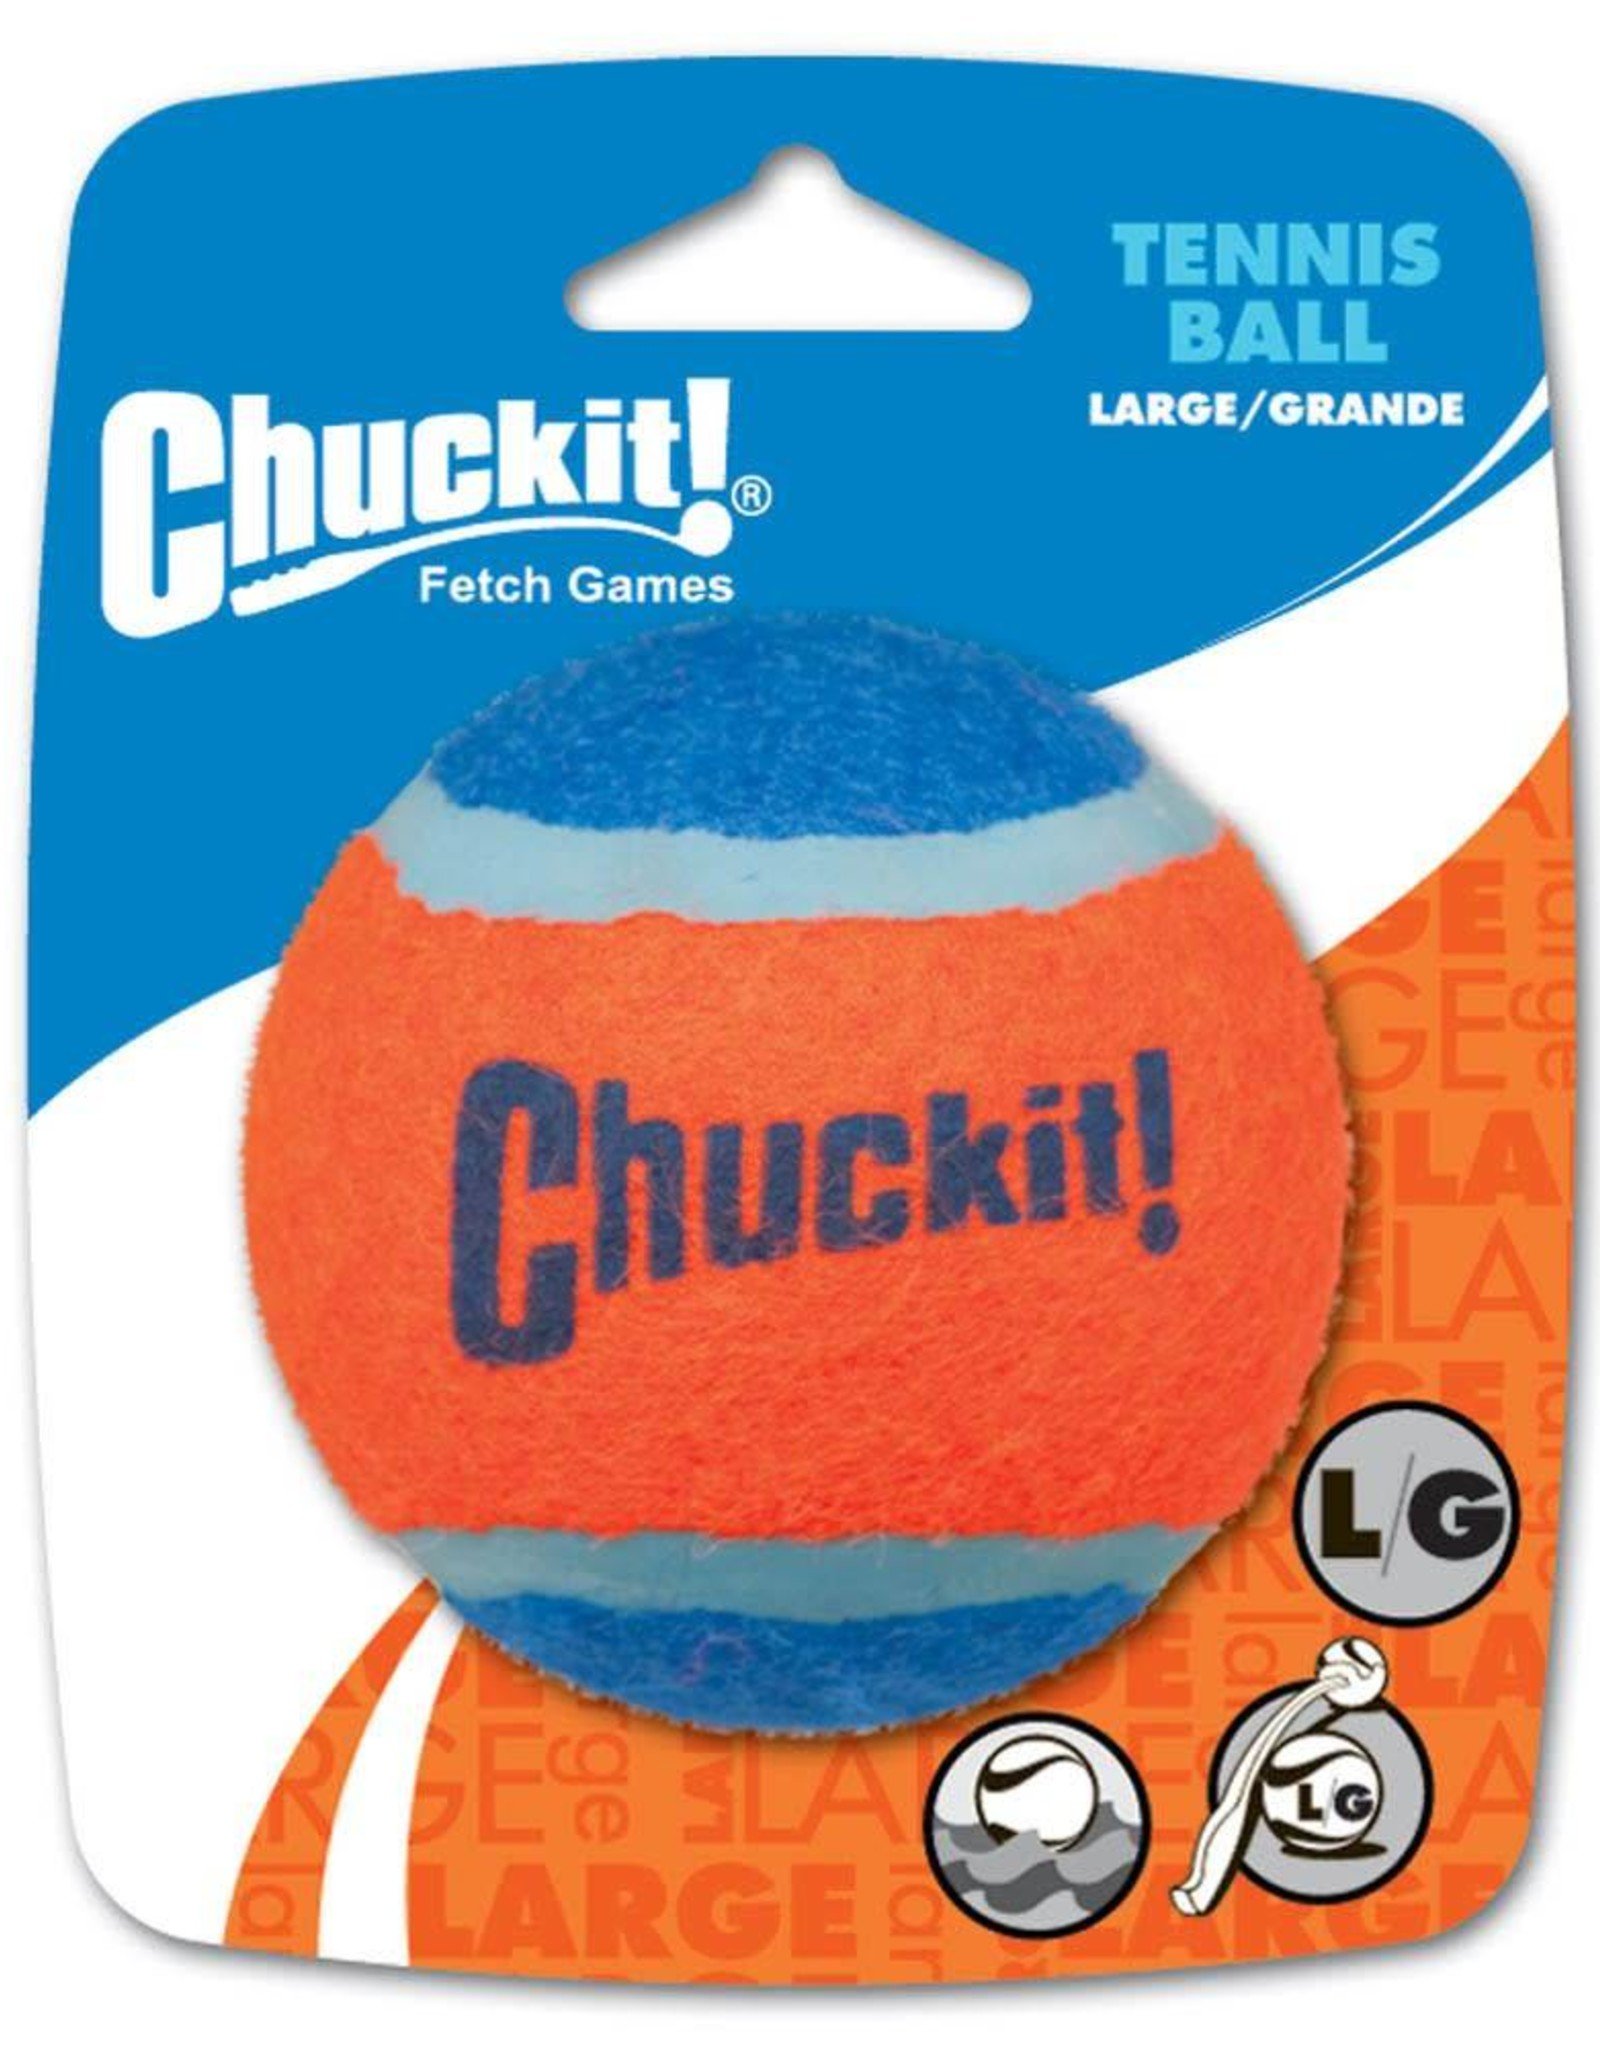 Chuckit! Chuckit! Tennis Ball Dog Toy Large